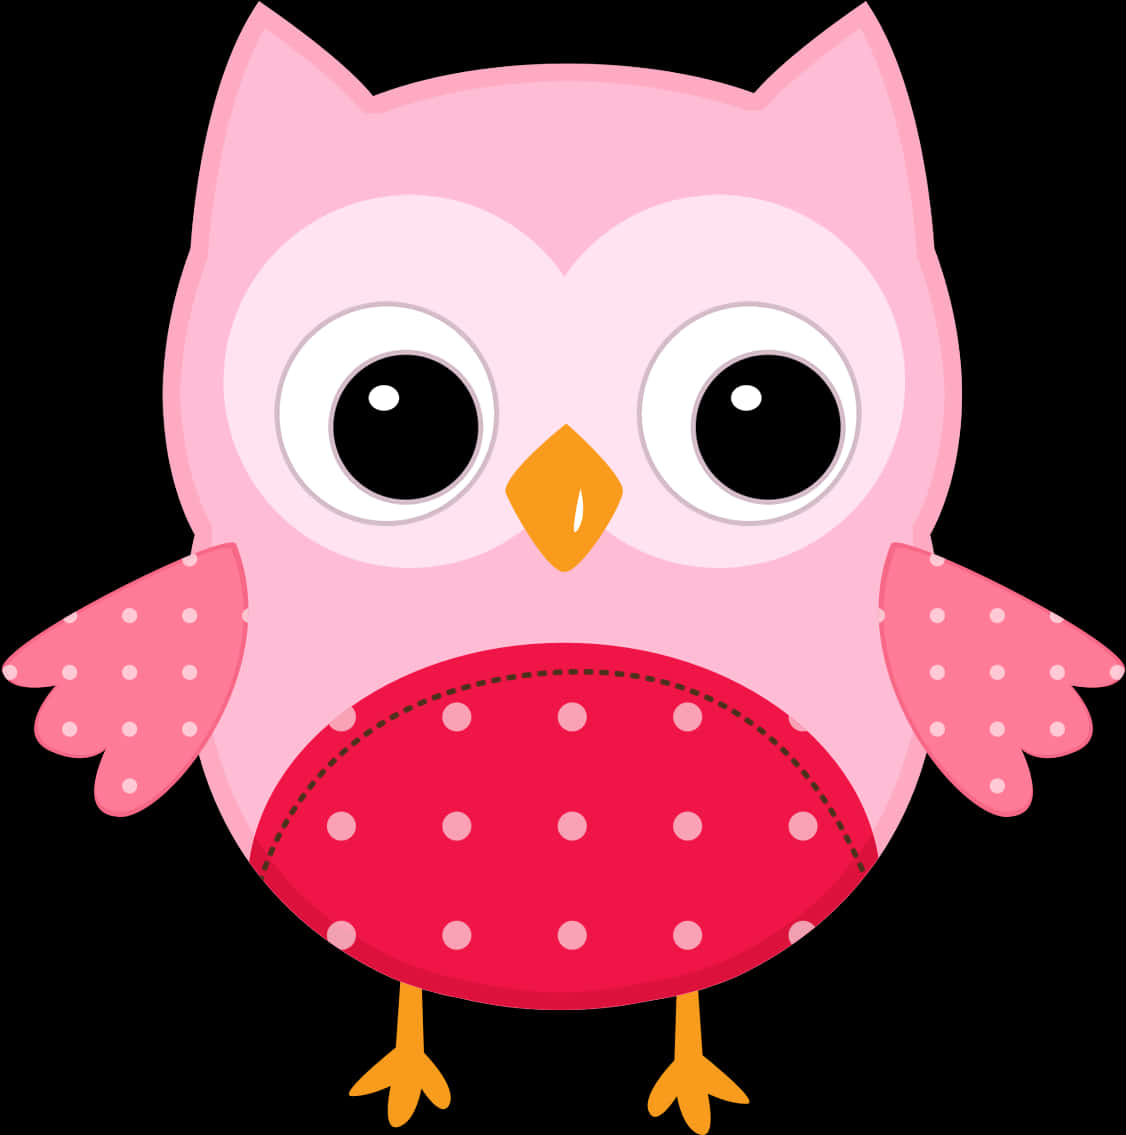 Cute Cartoon Owl Illustration PNG